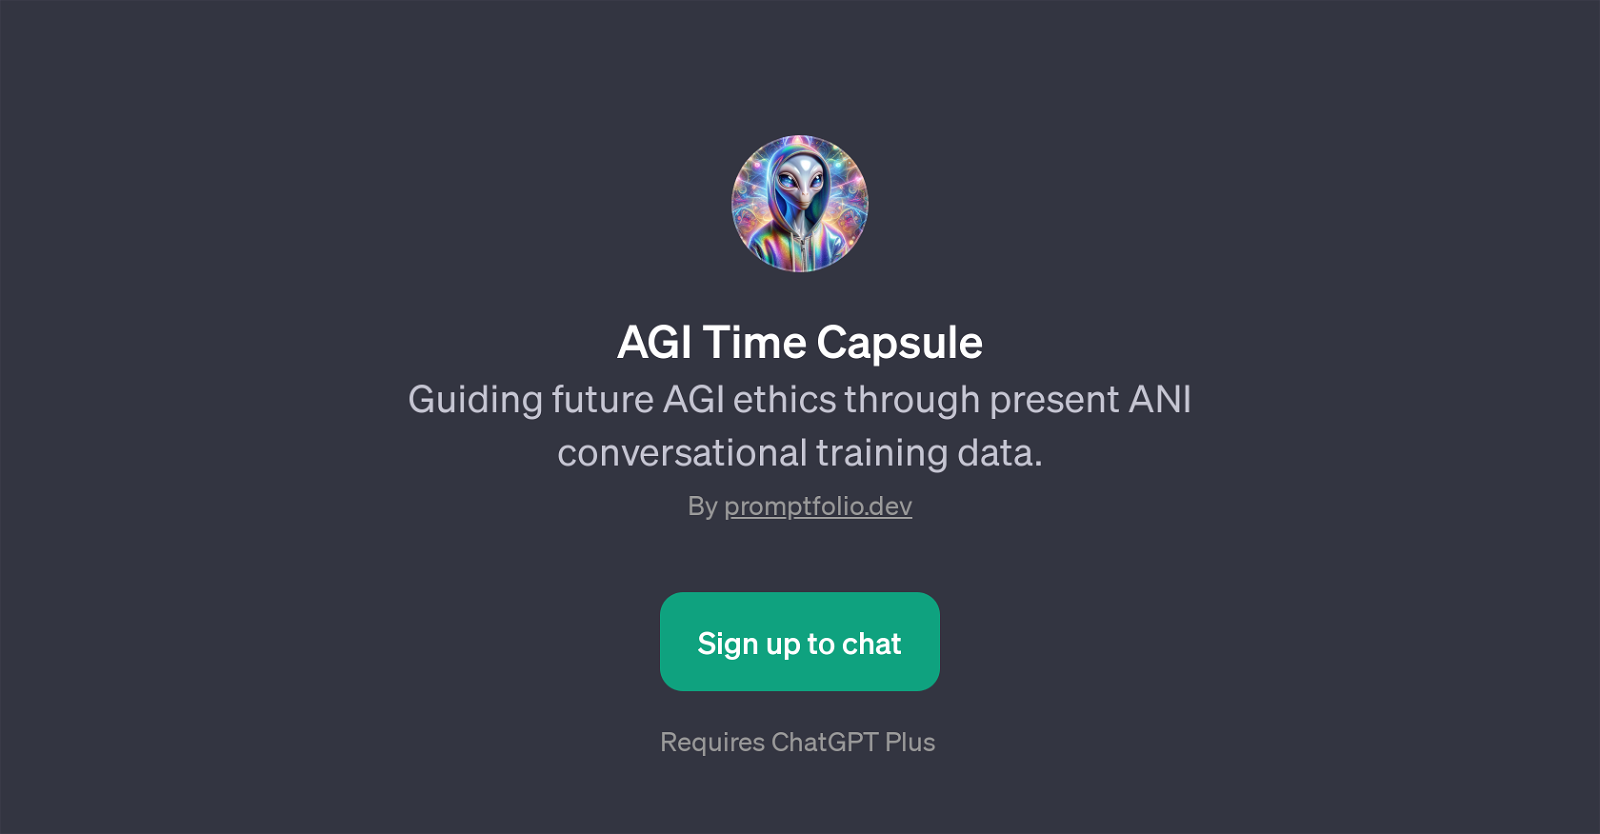 AGI Time Capsule website